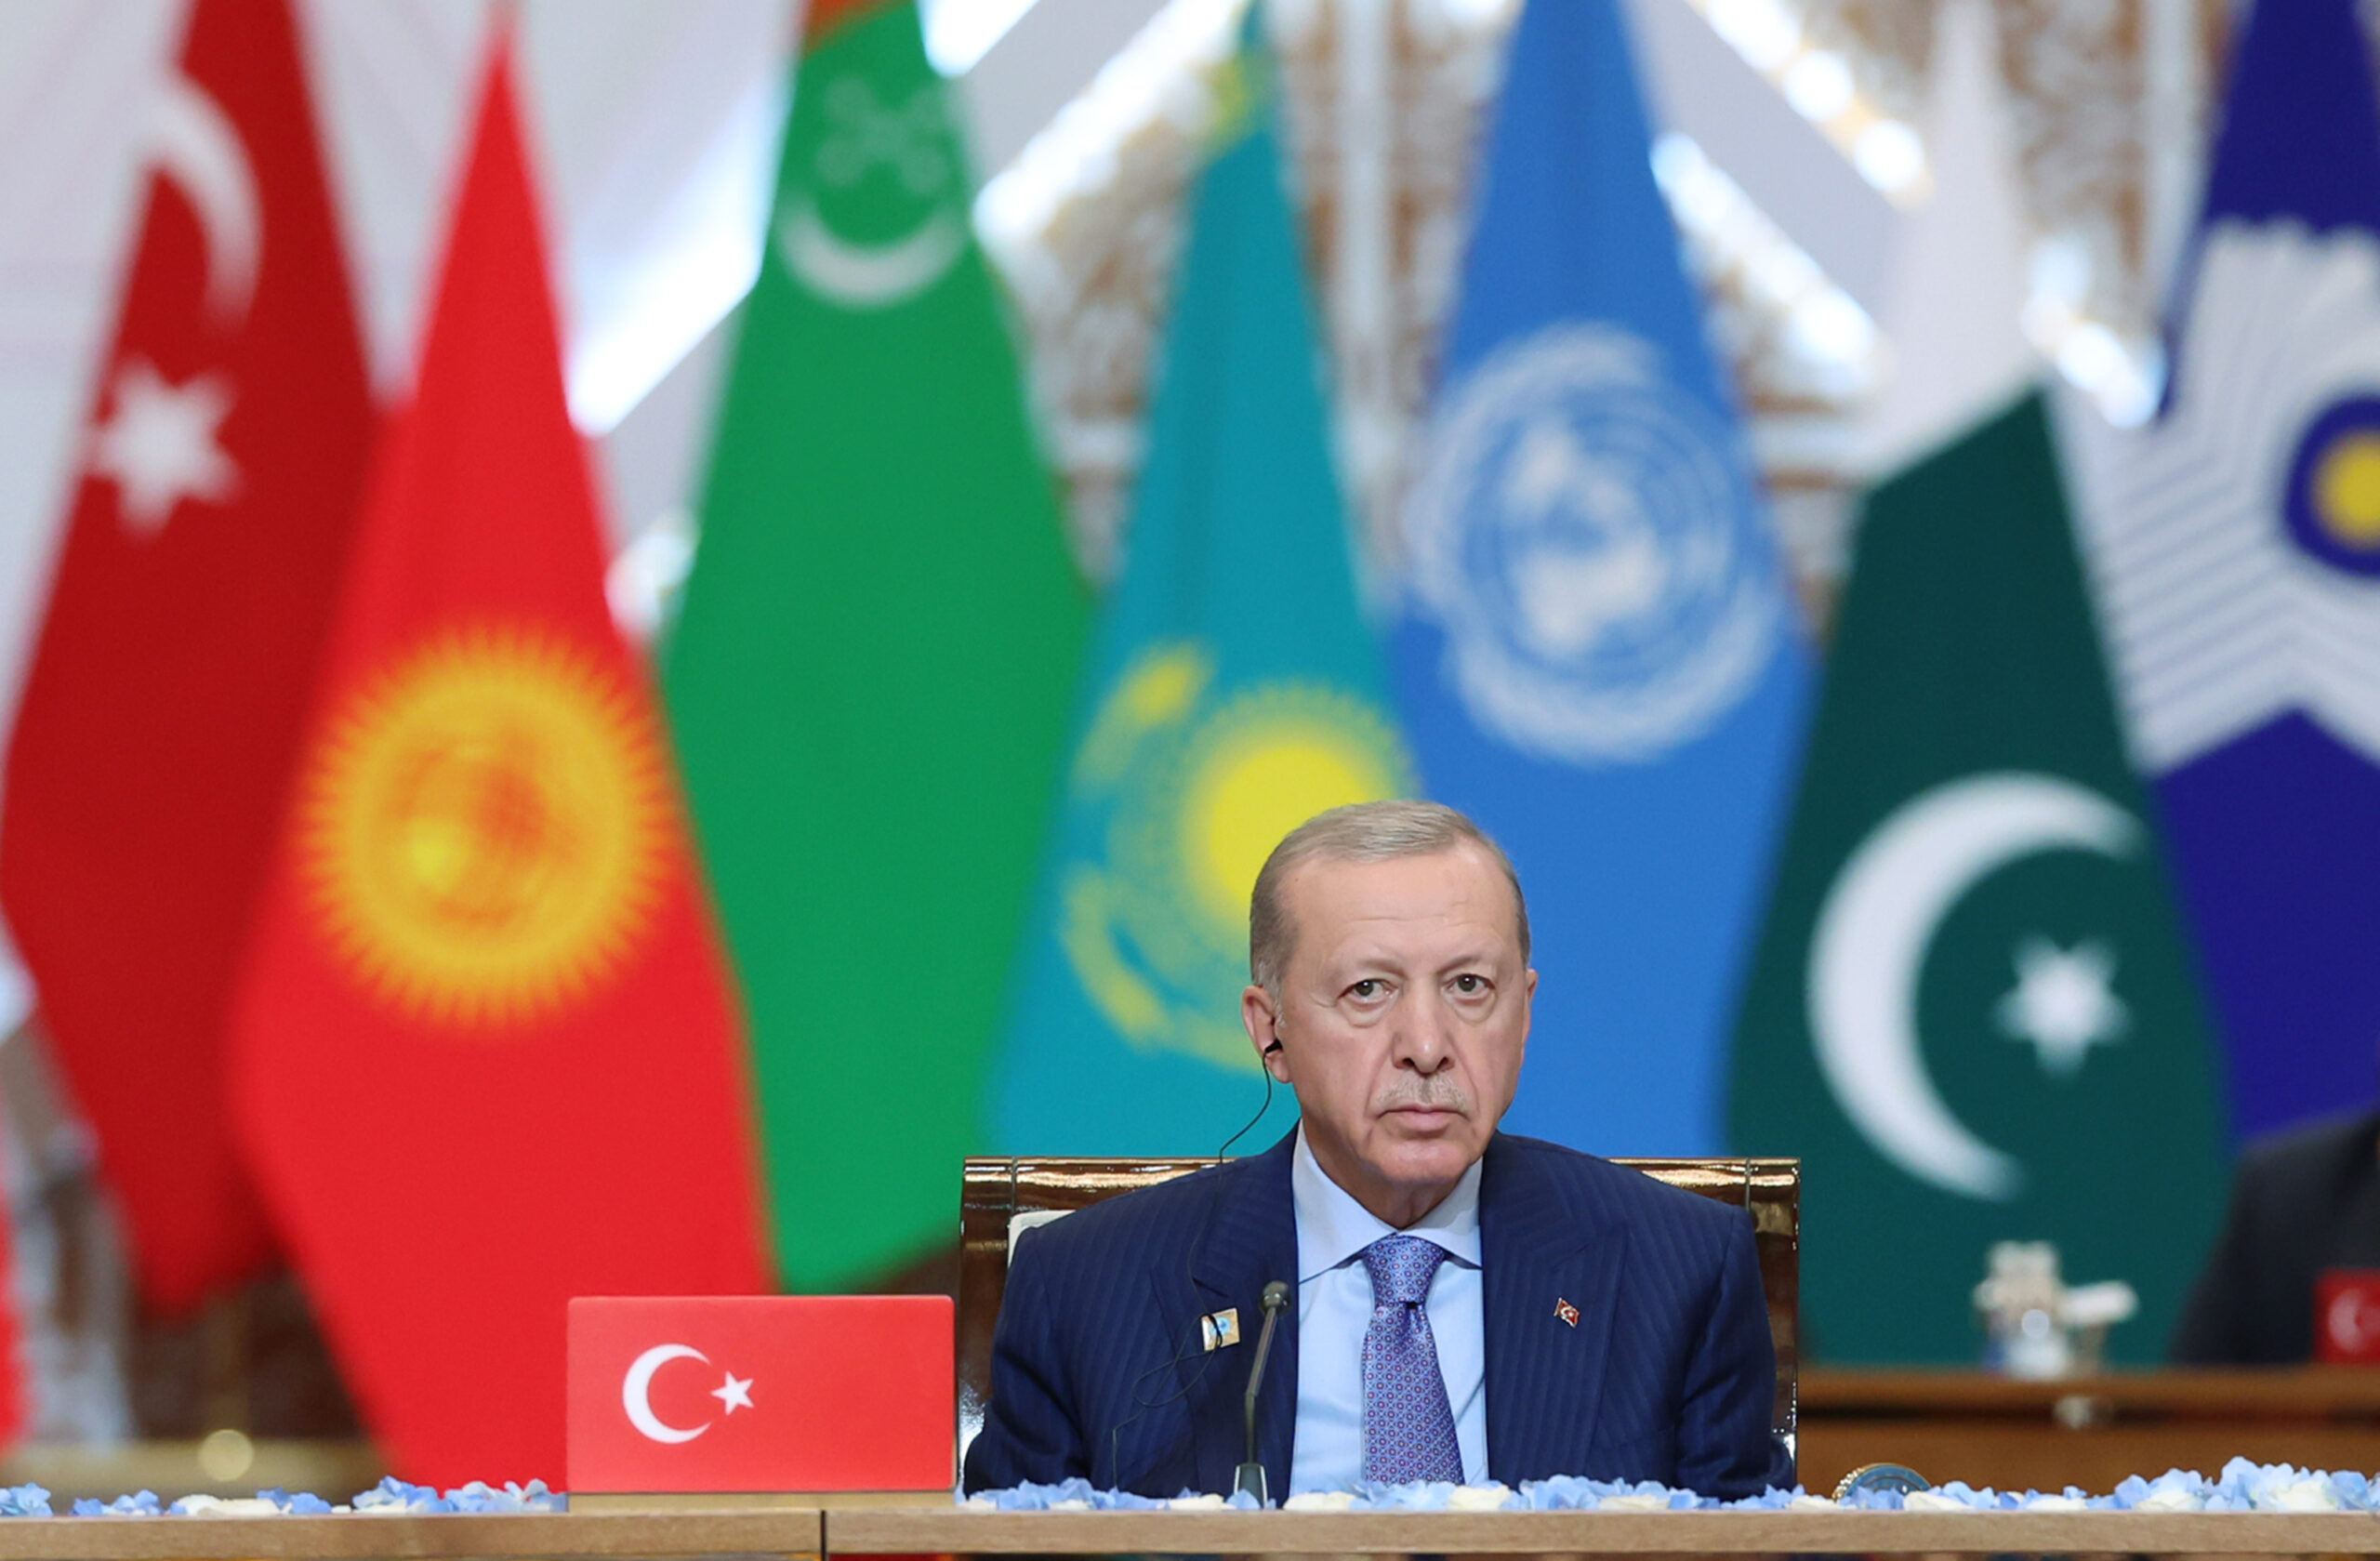 Türkiye aims to ensure peace in region through diplomacy, says President Erdogan